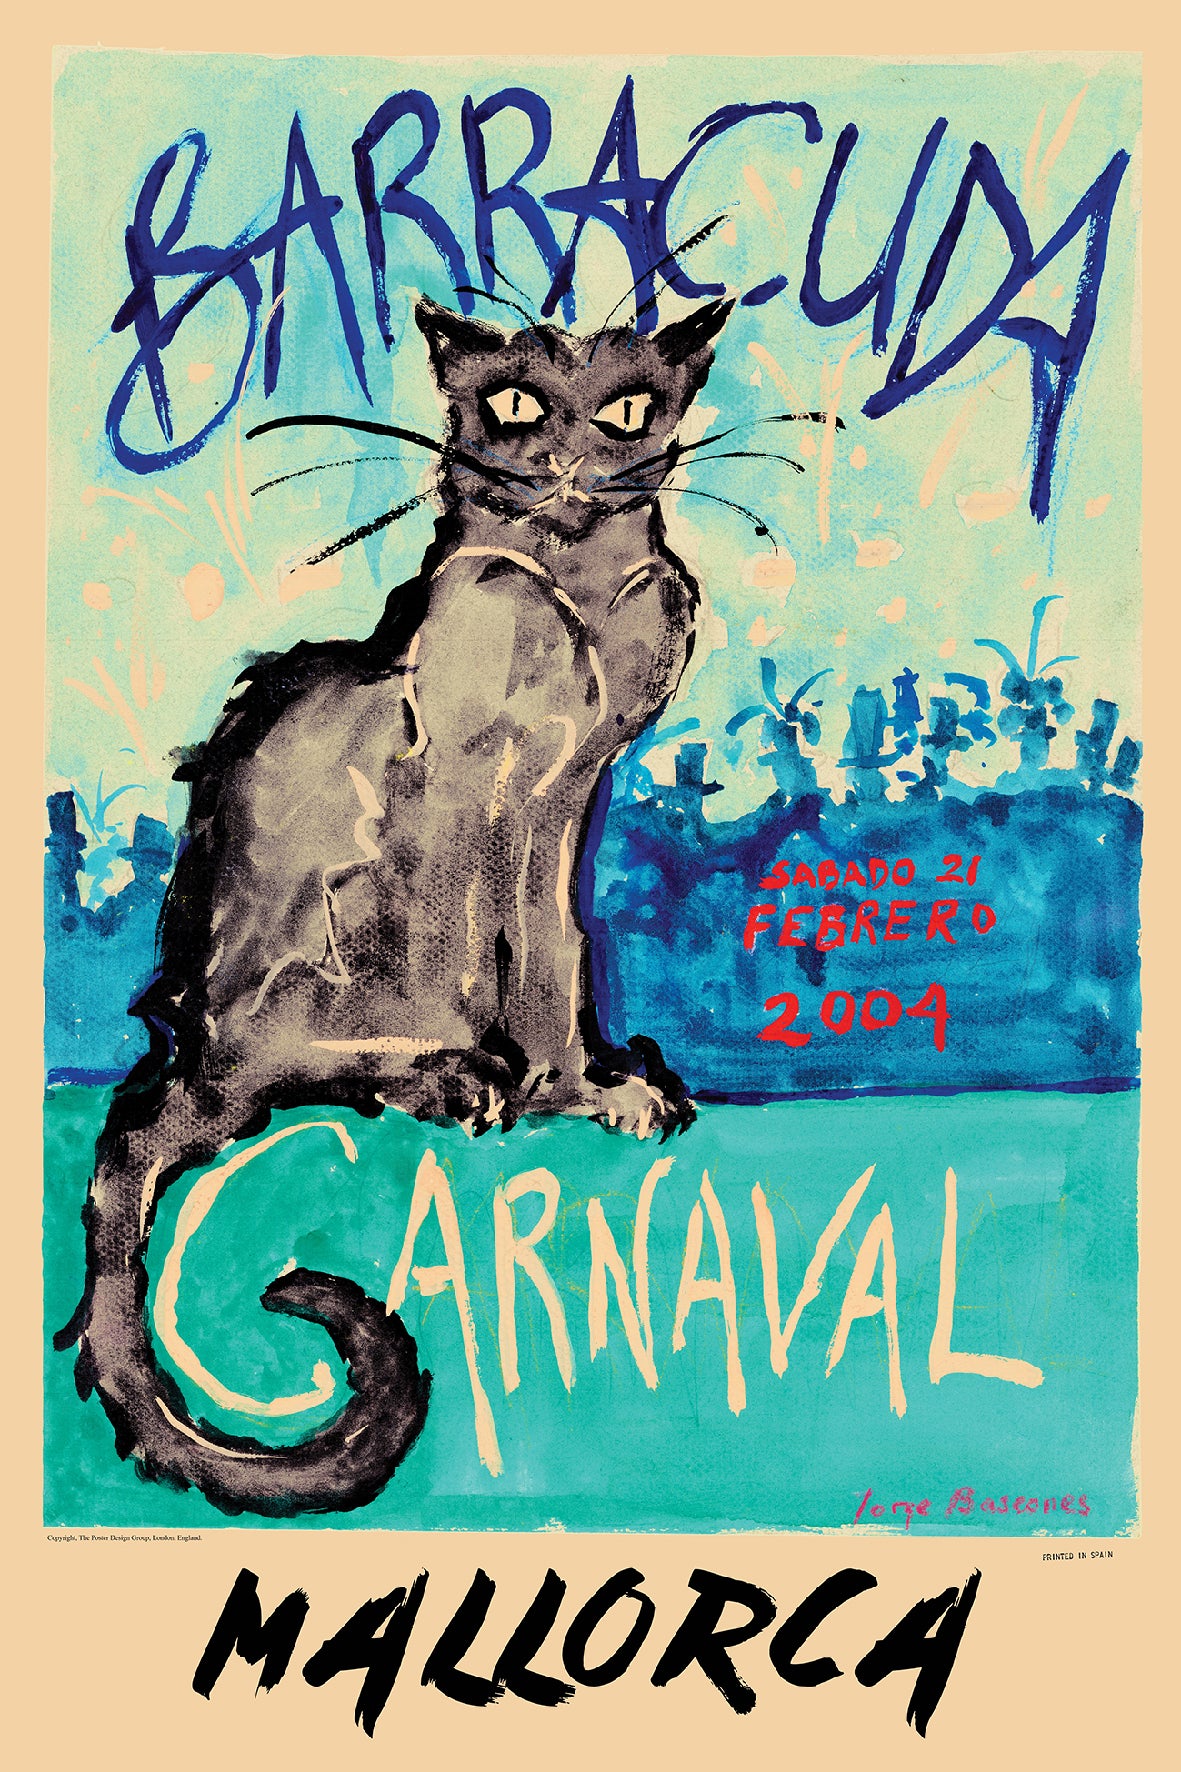 Barracuda, Chat Noir, Carnaval, Mallorca. [Light Blue]